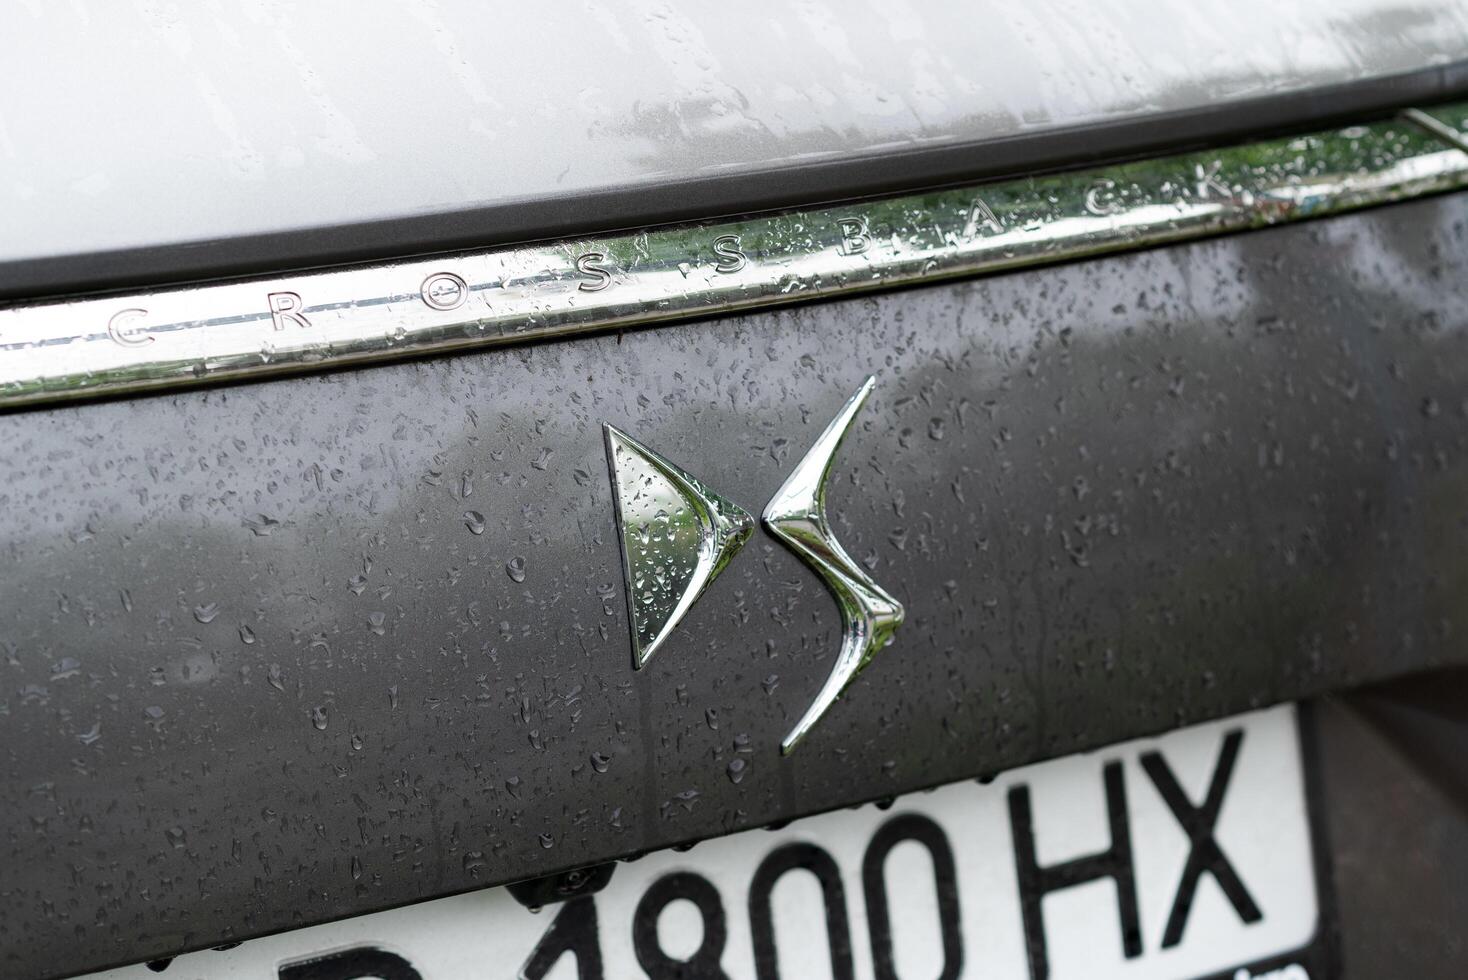 kiev, Oekraïne - april, 2024. ds 7 crossback buitenkant auto detailopname logo met water druppels foto